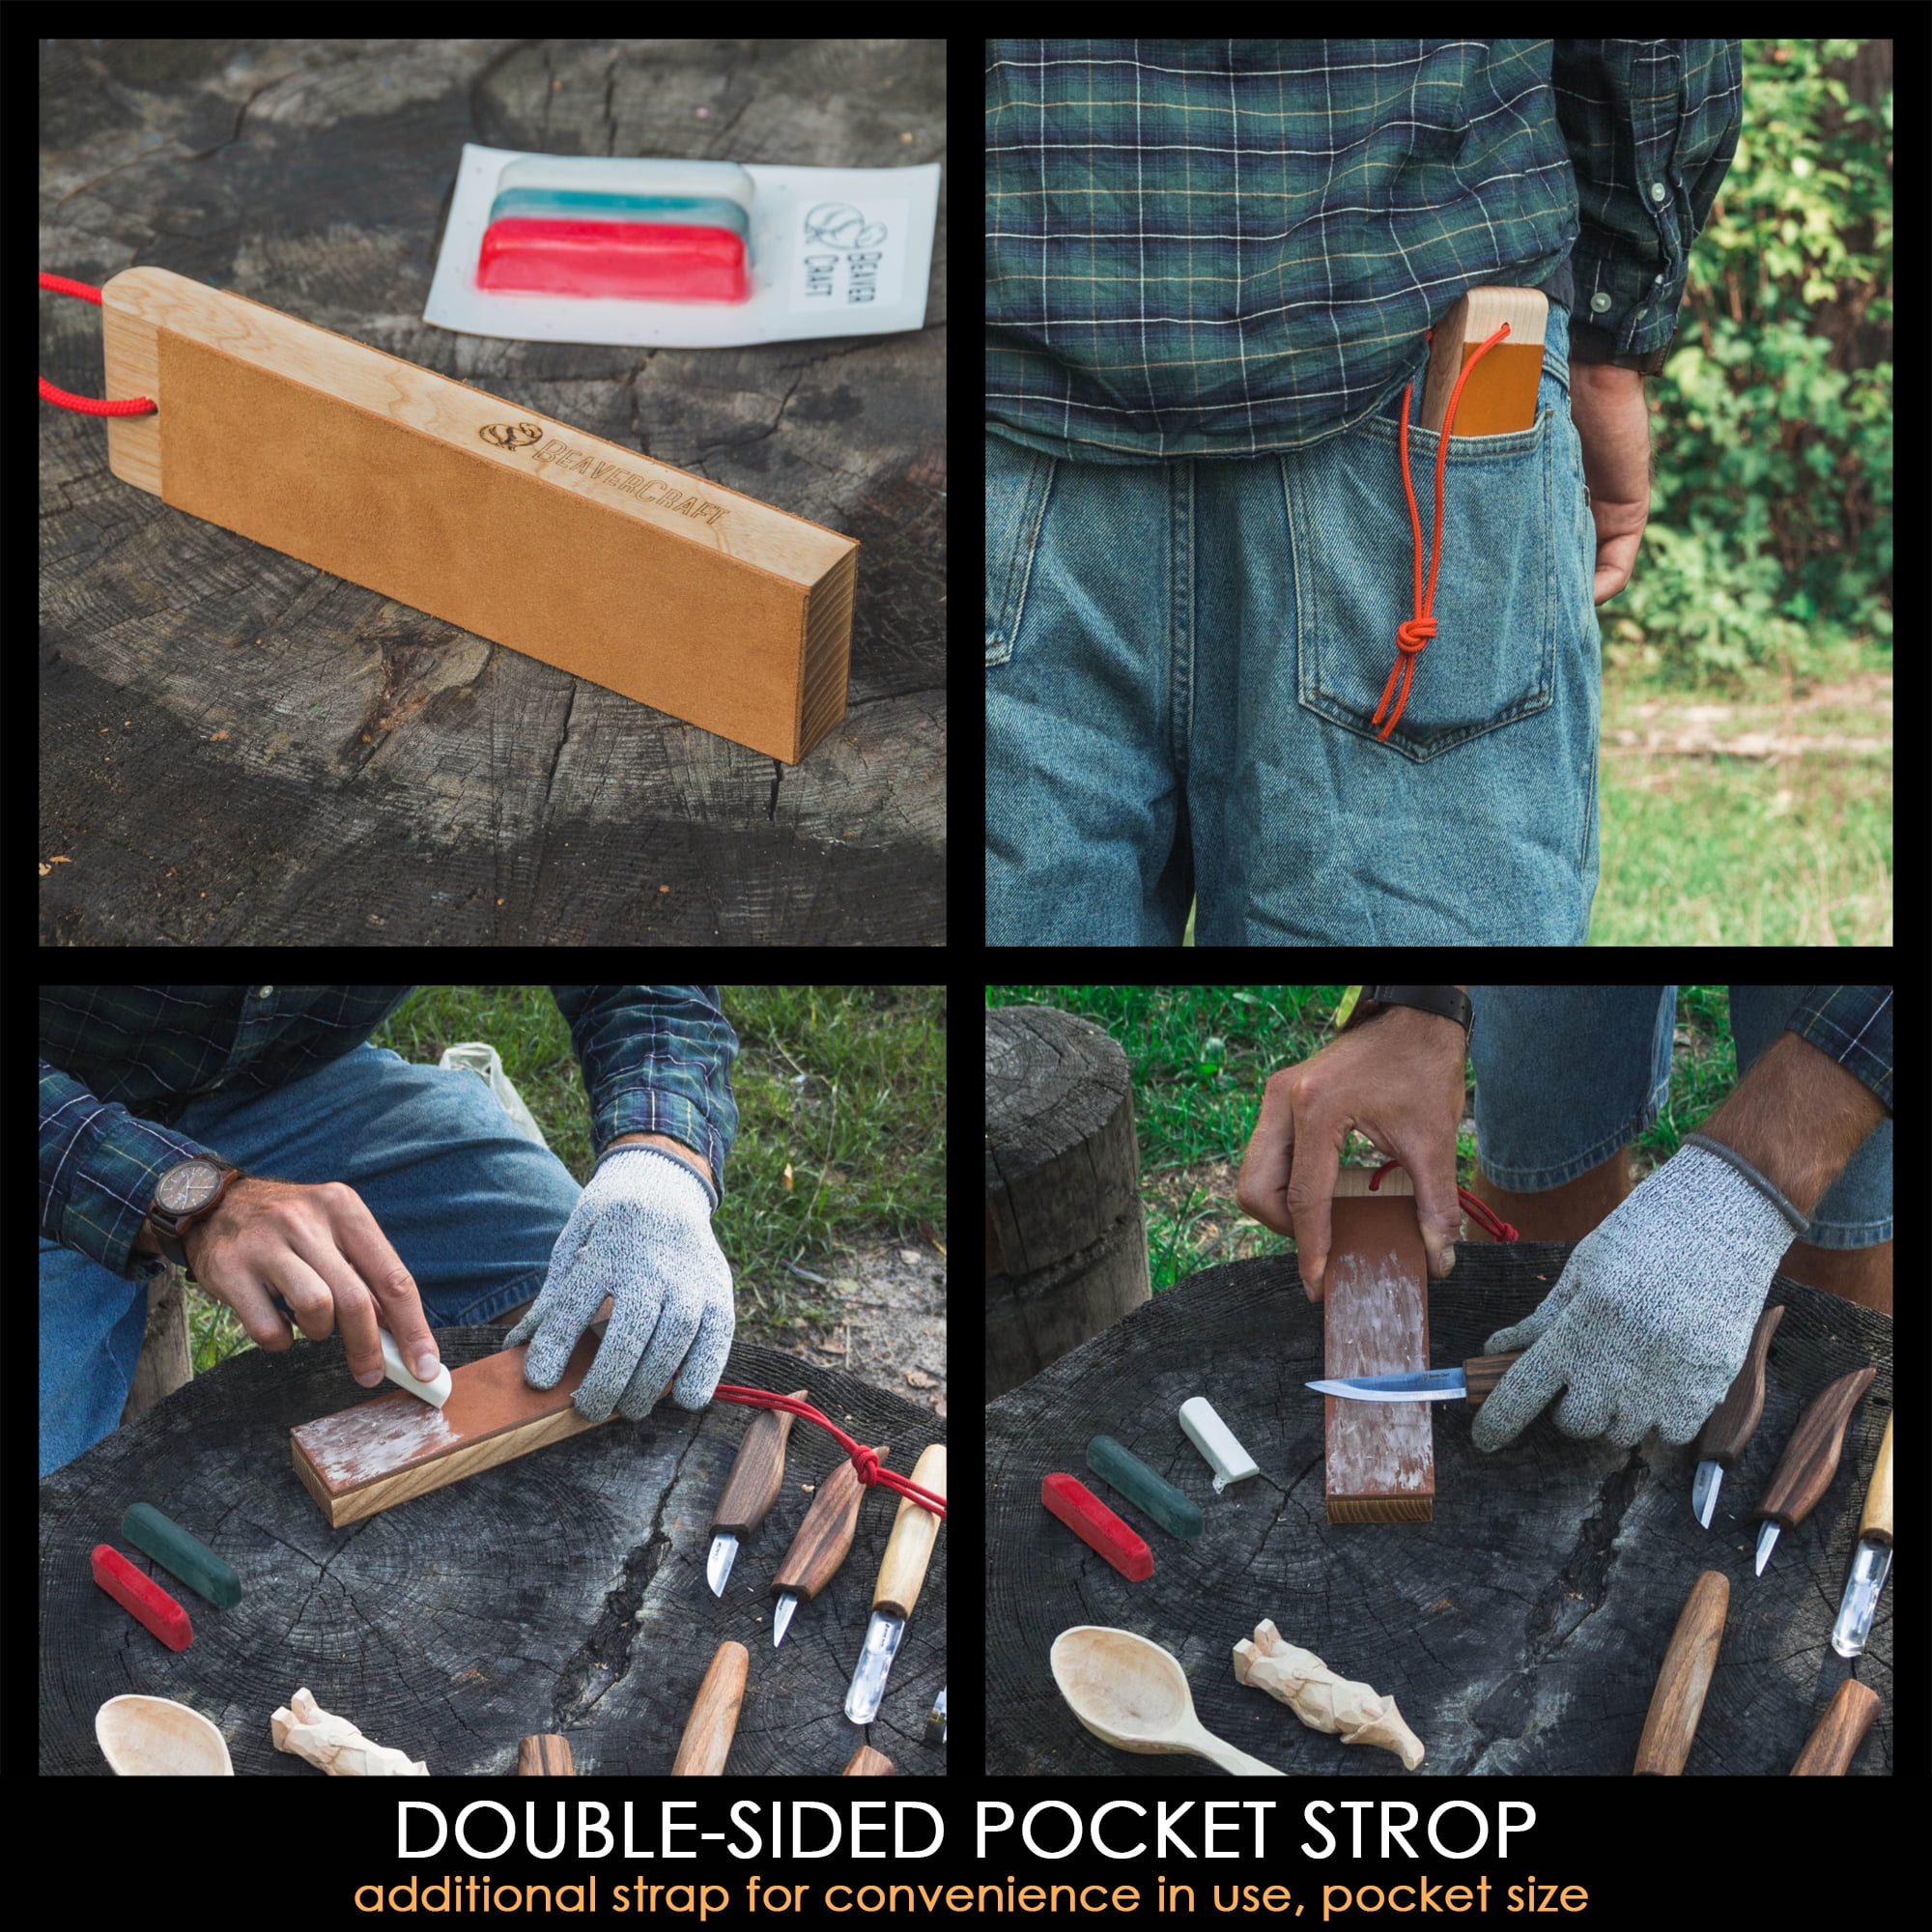 BeaverCraft, Deluxe Wood Carving Kit S50X - Wood Carving Tools Wood Carving Set - Spoon Wood Carving Knives Tools Set - Whittling Kit Knife